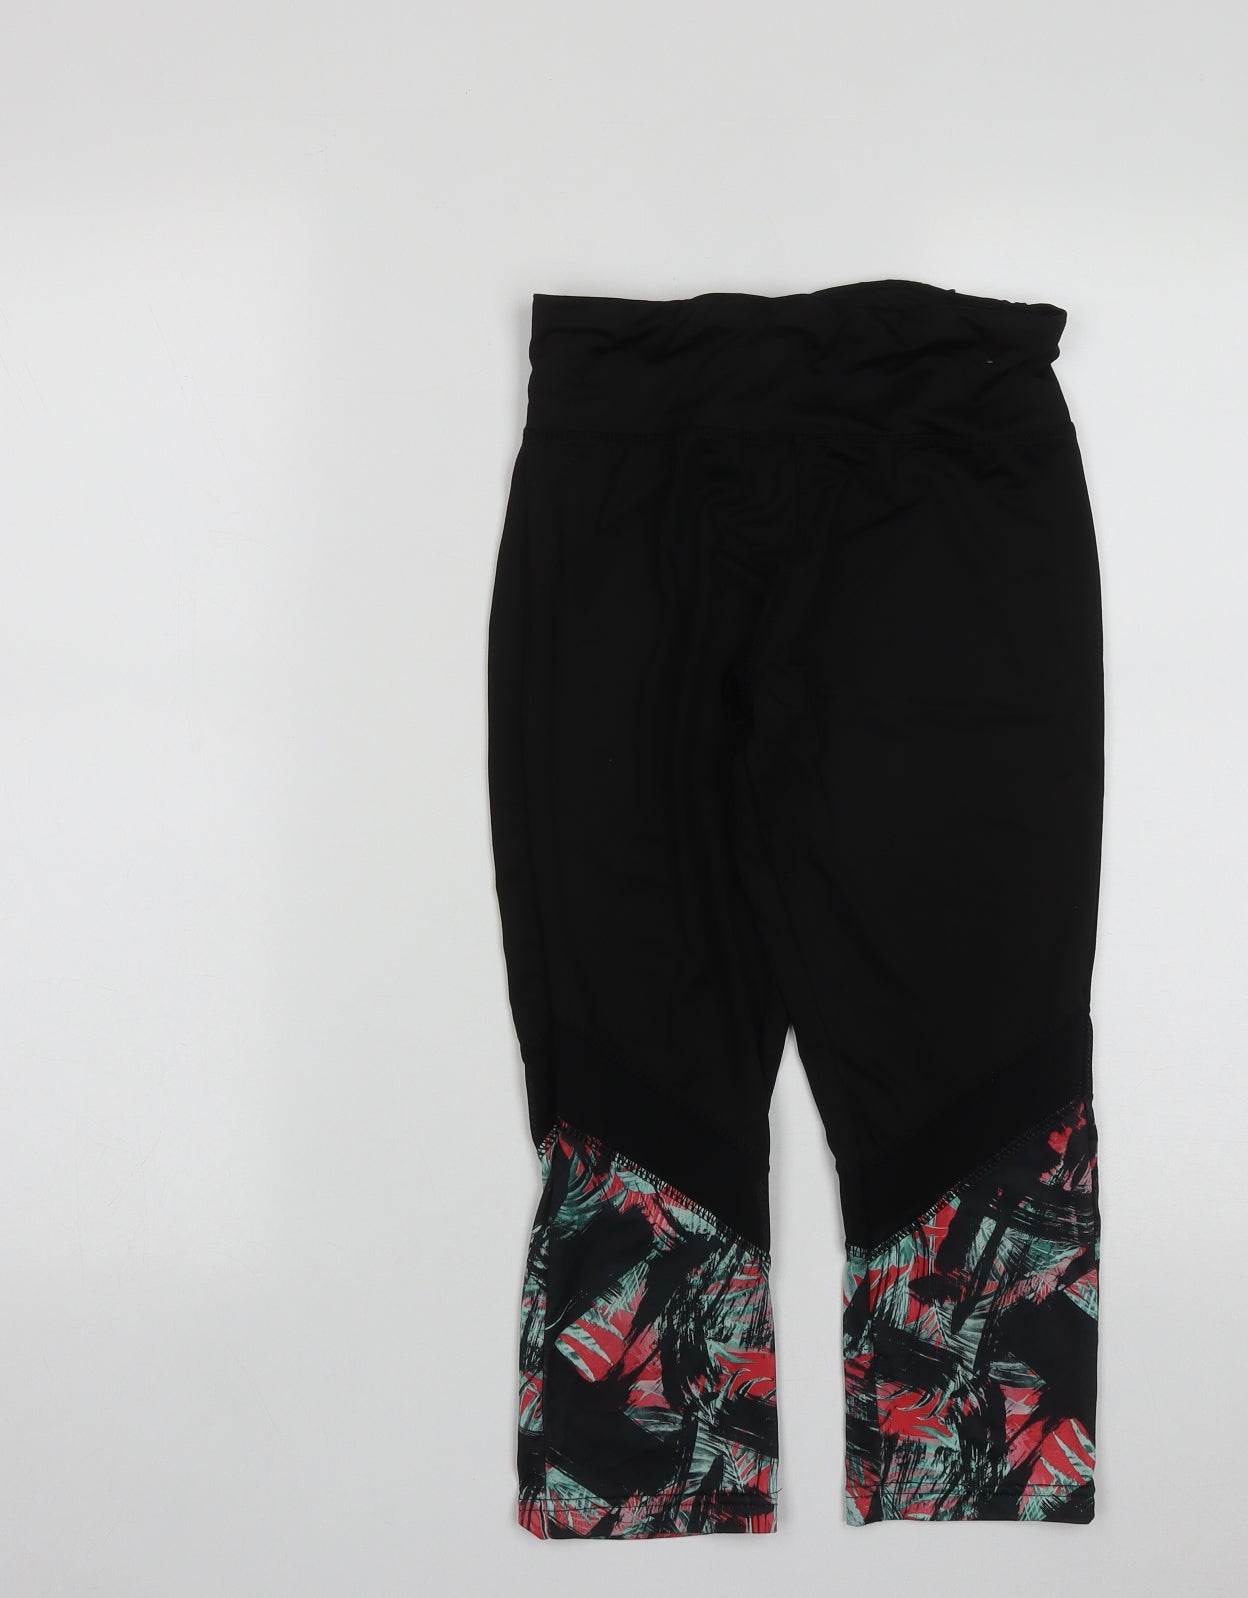 Primark Womens Black Geometric Polyester Cropped Leggings Size 8 L18 i – Preworn  Ltd